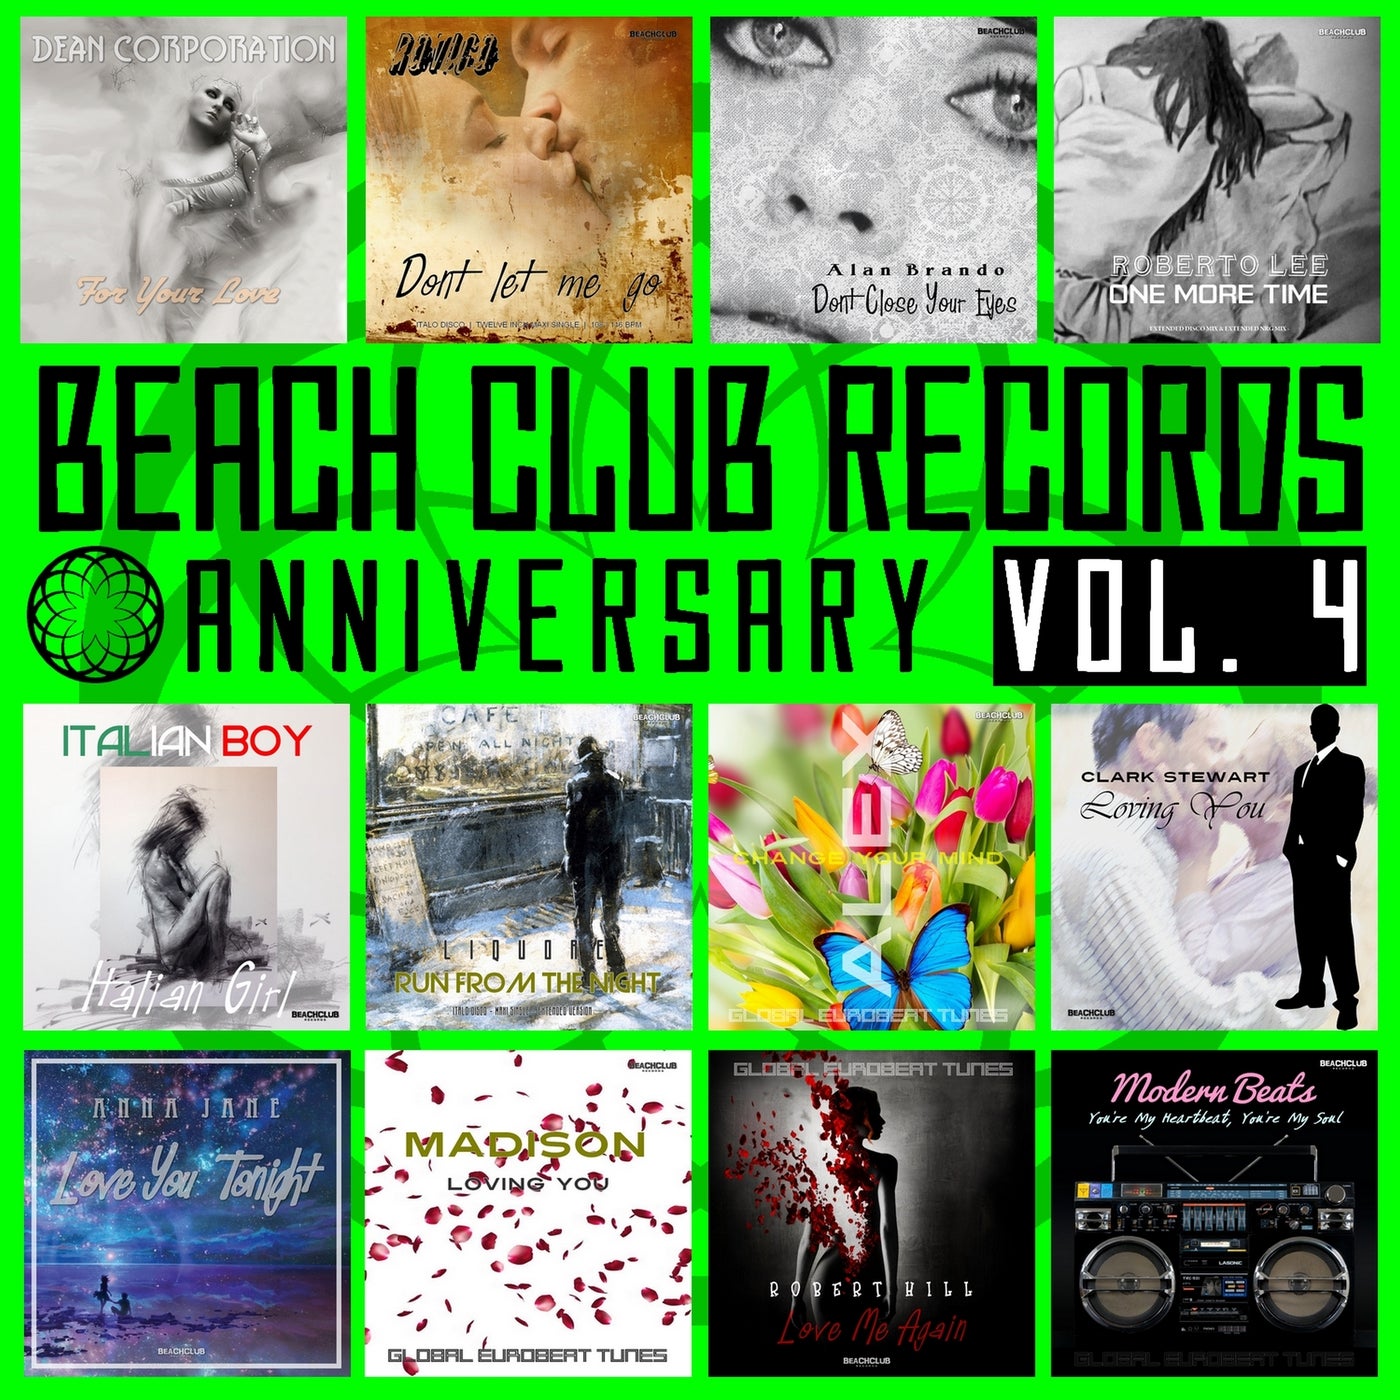 Beach Club Records Anniversary, Vol. 4